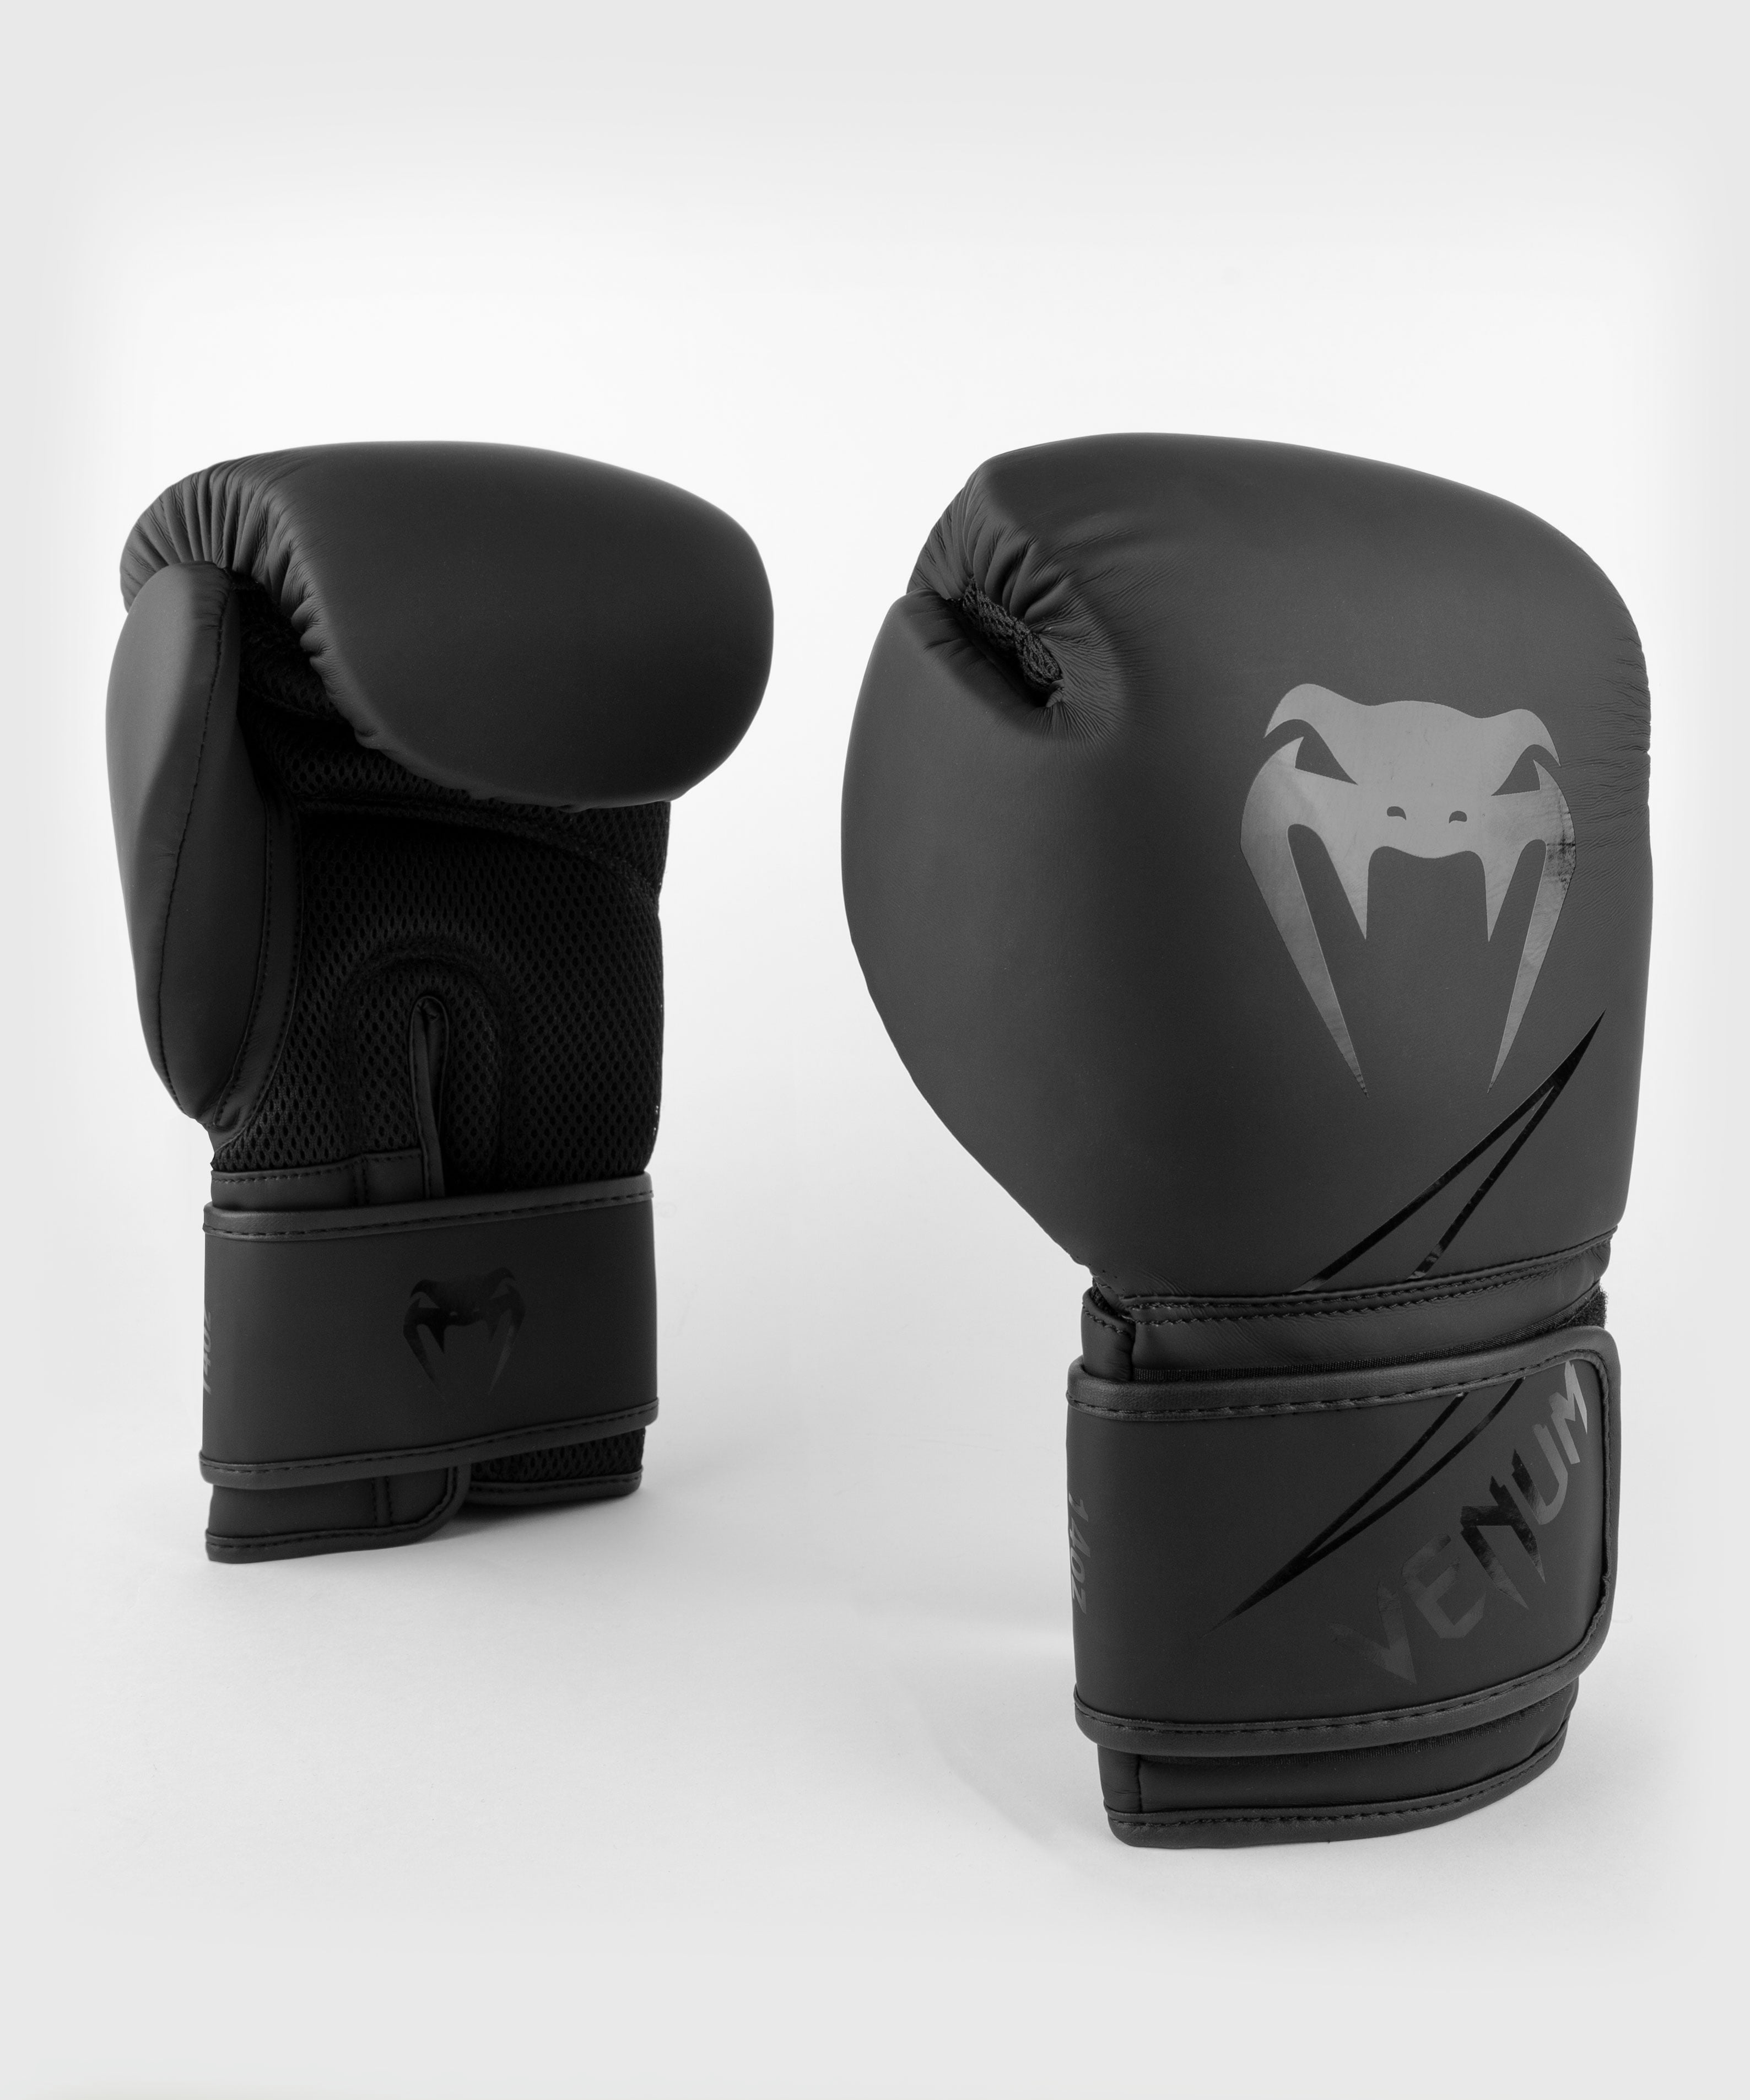 Hexa Pro Boxing Sparring Gloves MMA Punch Bag Mitt UFC Fight Training 8oz-16oz 